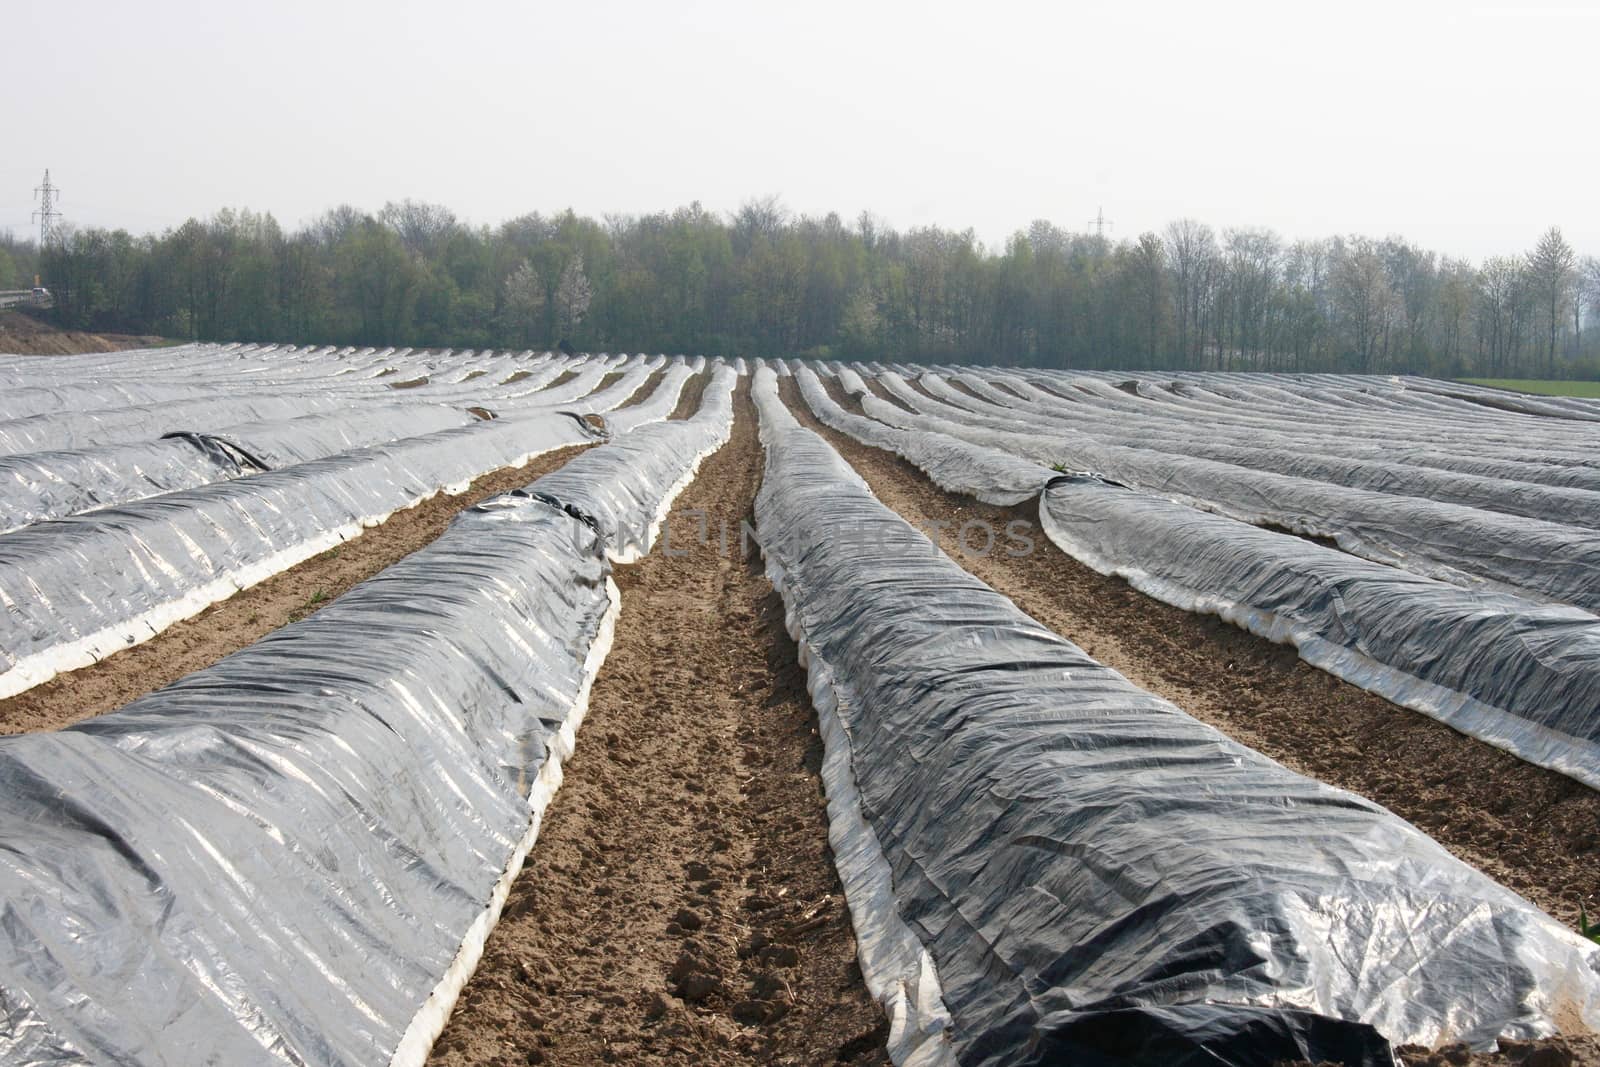 a big, with, foil-covered asparagus field    ein gro�es,mit Folie abgedecktes Spargelfeld   by hadot